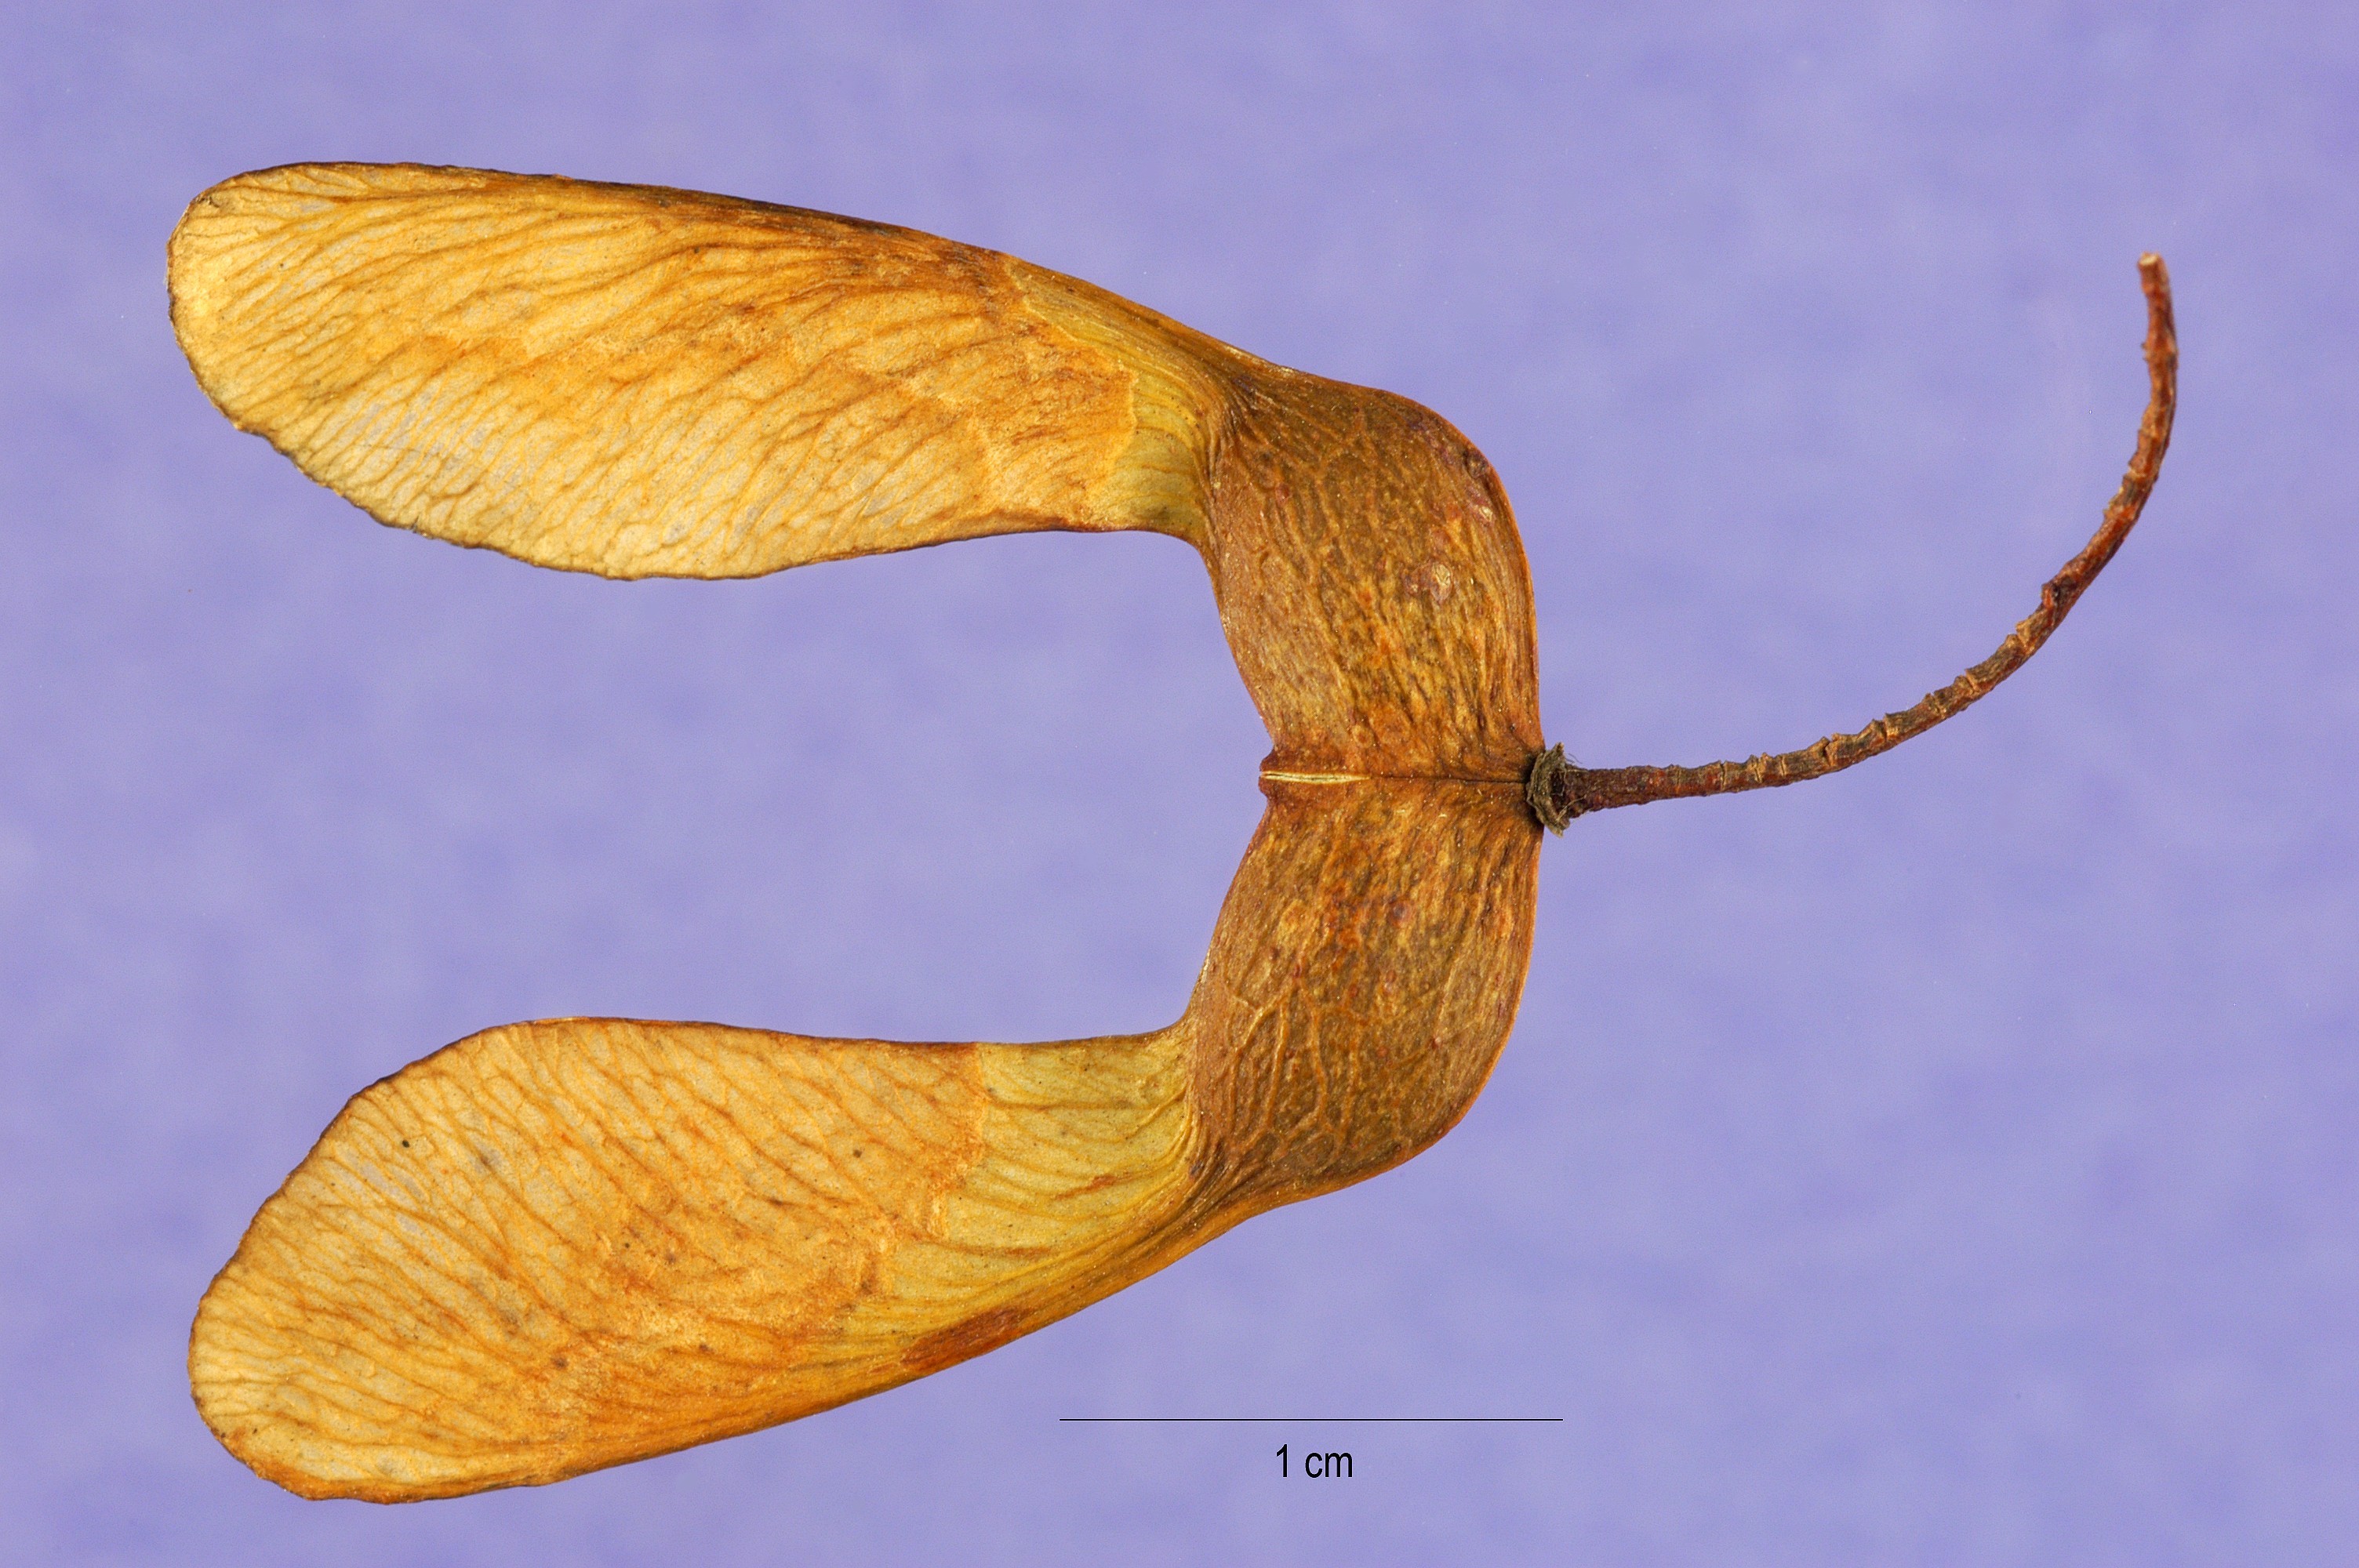 Acer saccharum seeds